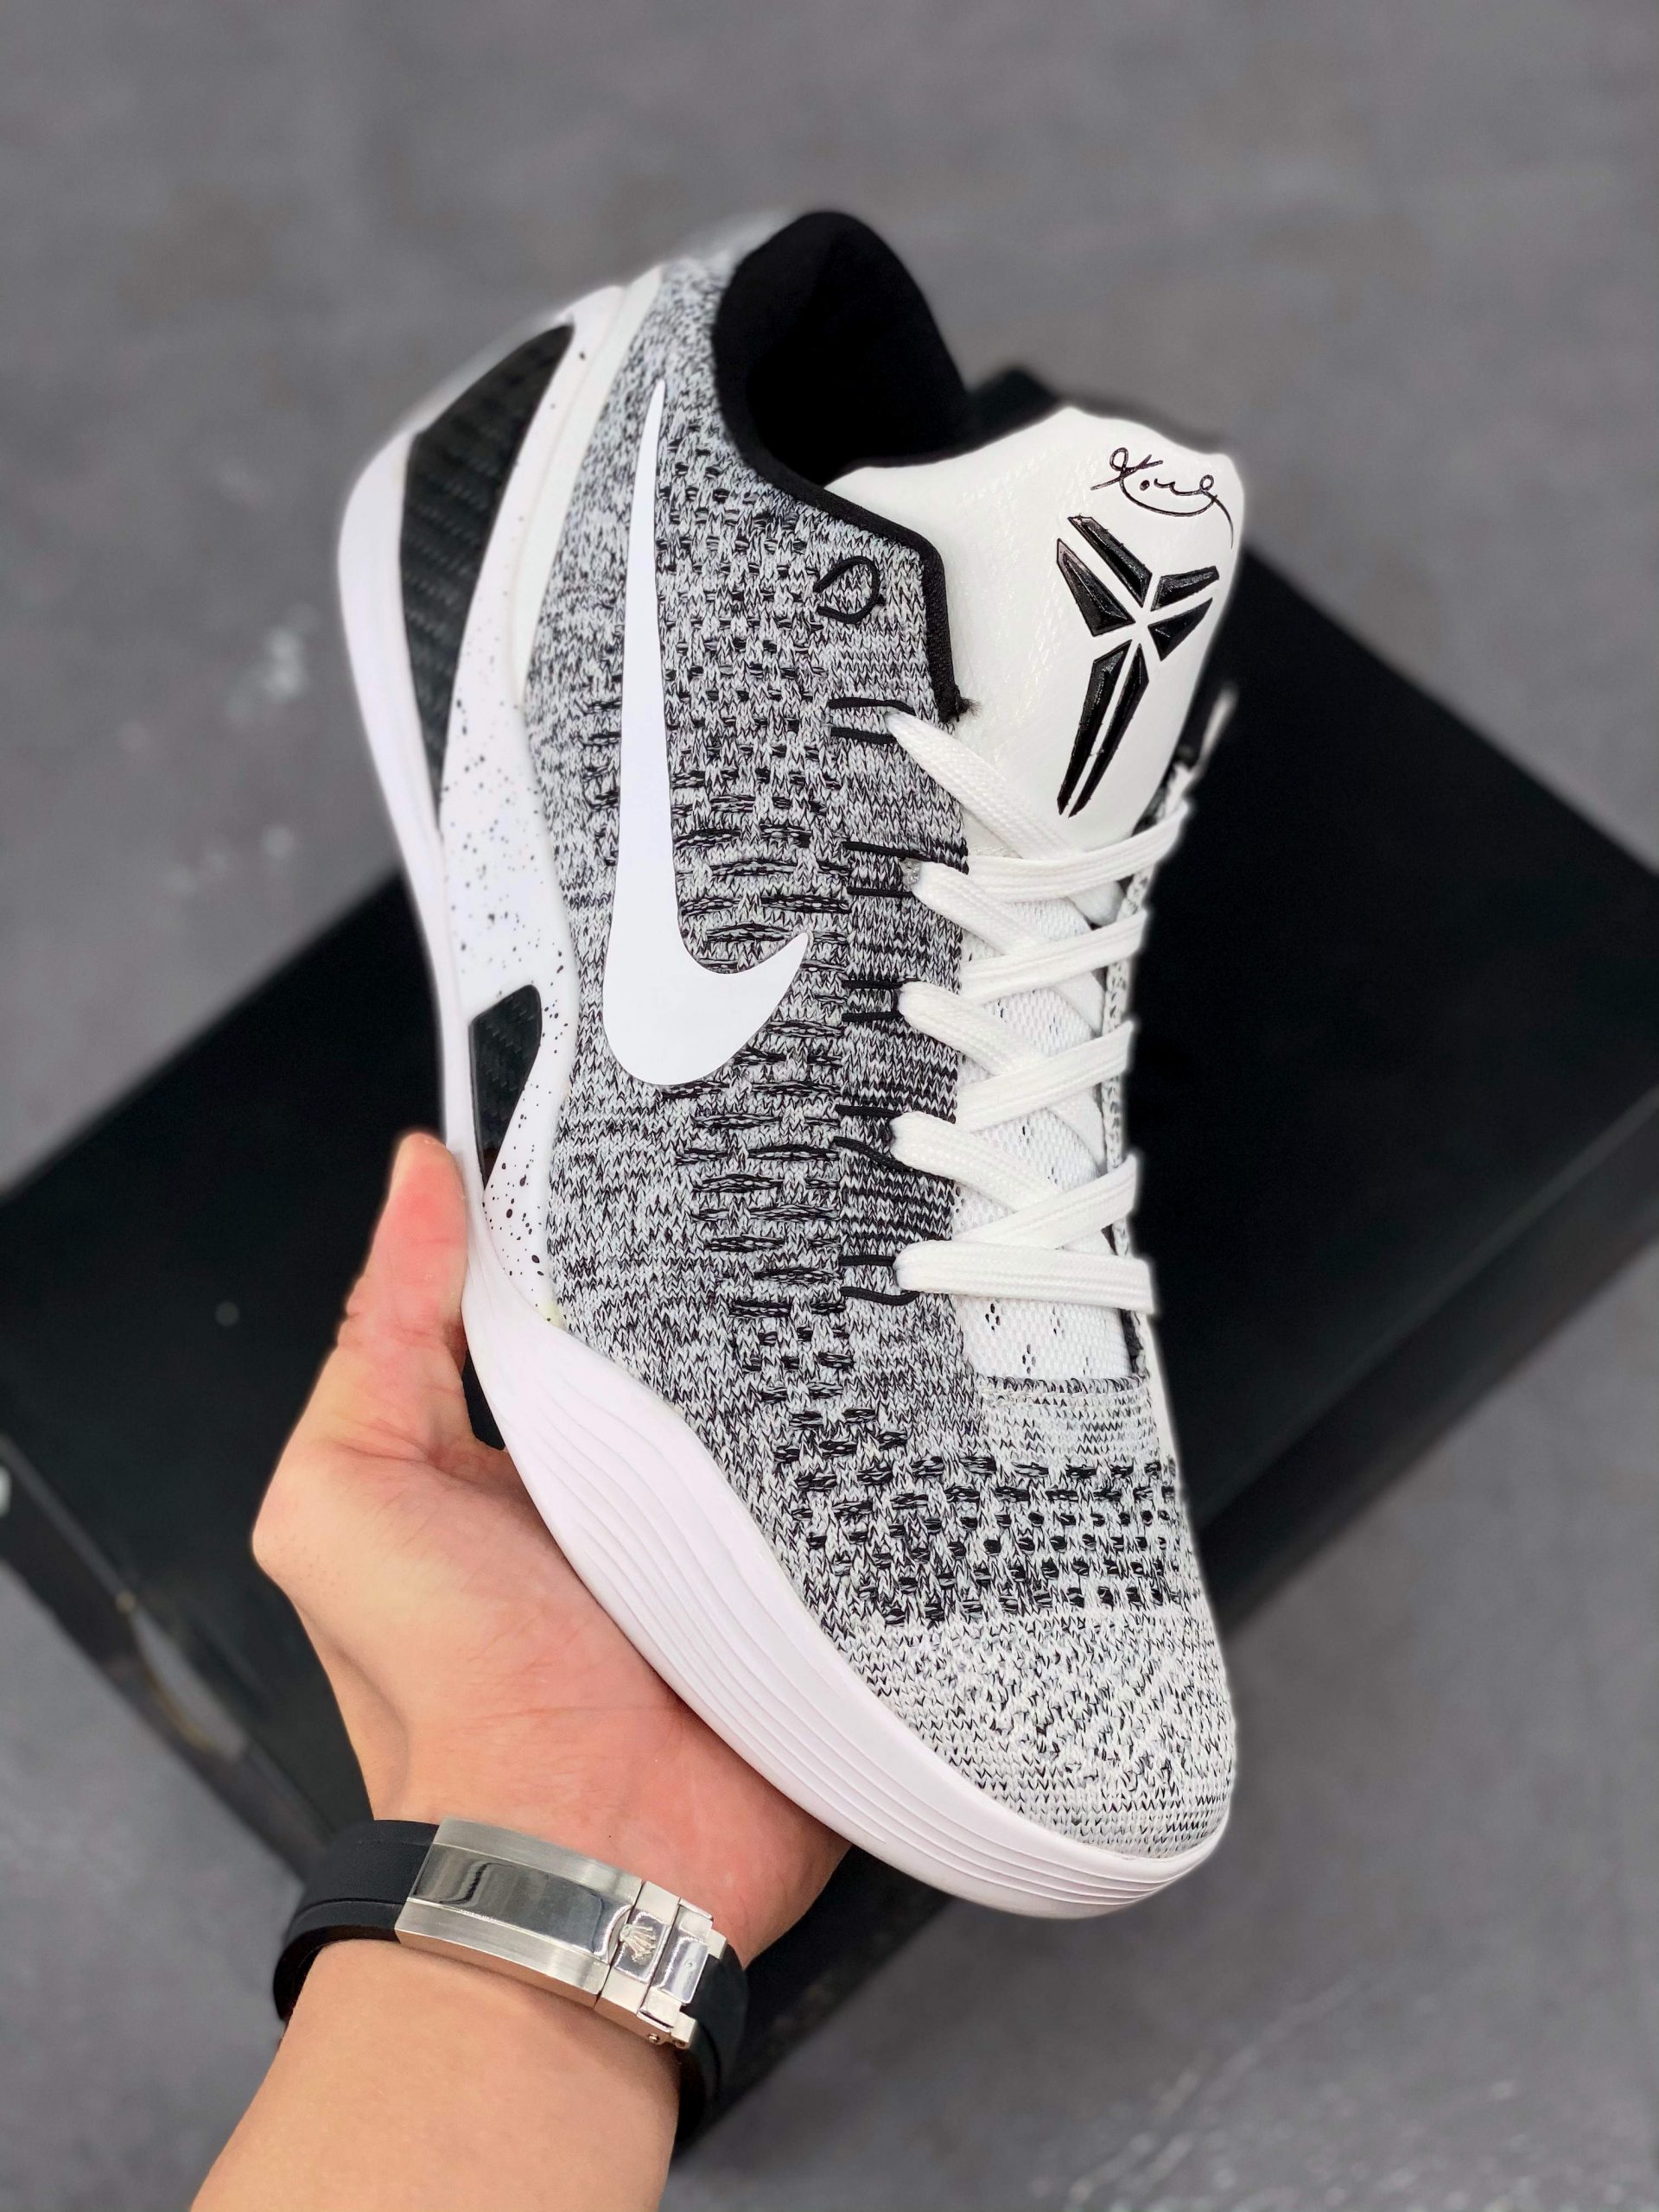 Nike Kobe 9 Elite Low “Beethoven” White/Black-Wolf Grey For Sale ... Kobe 9 Low On Feet